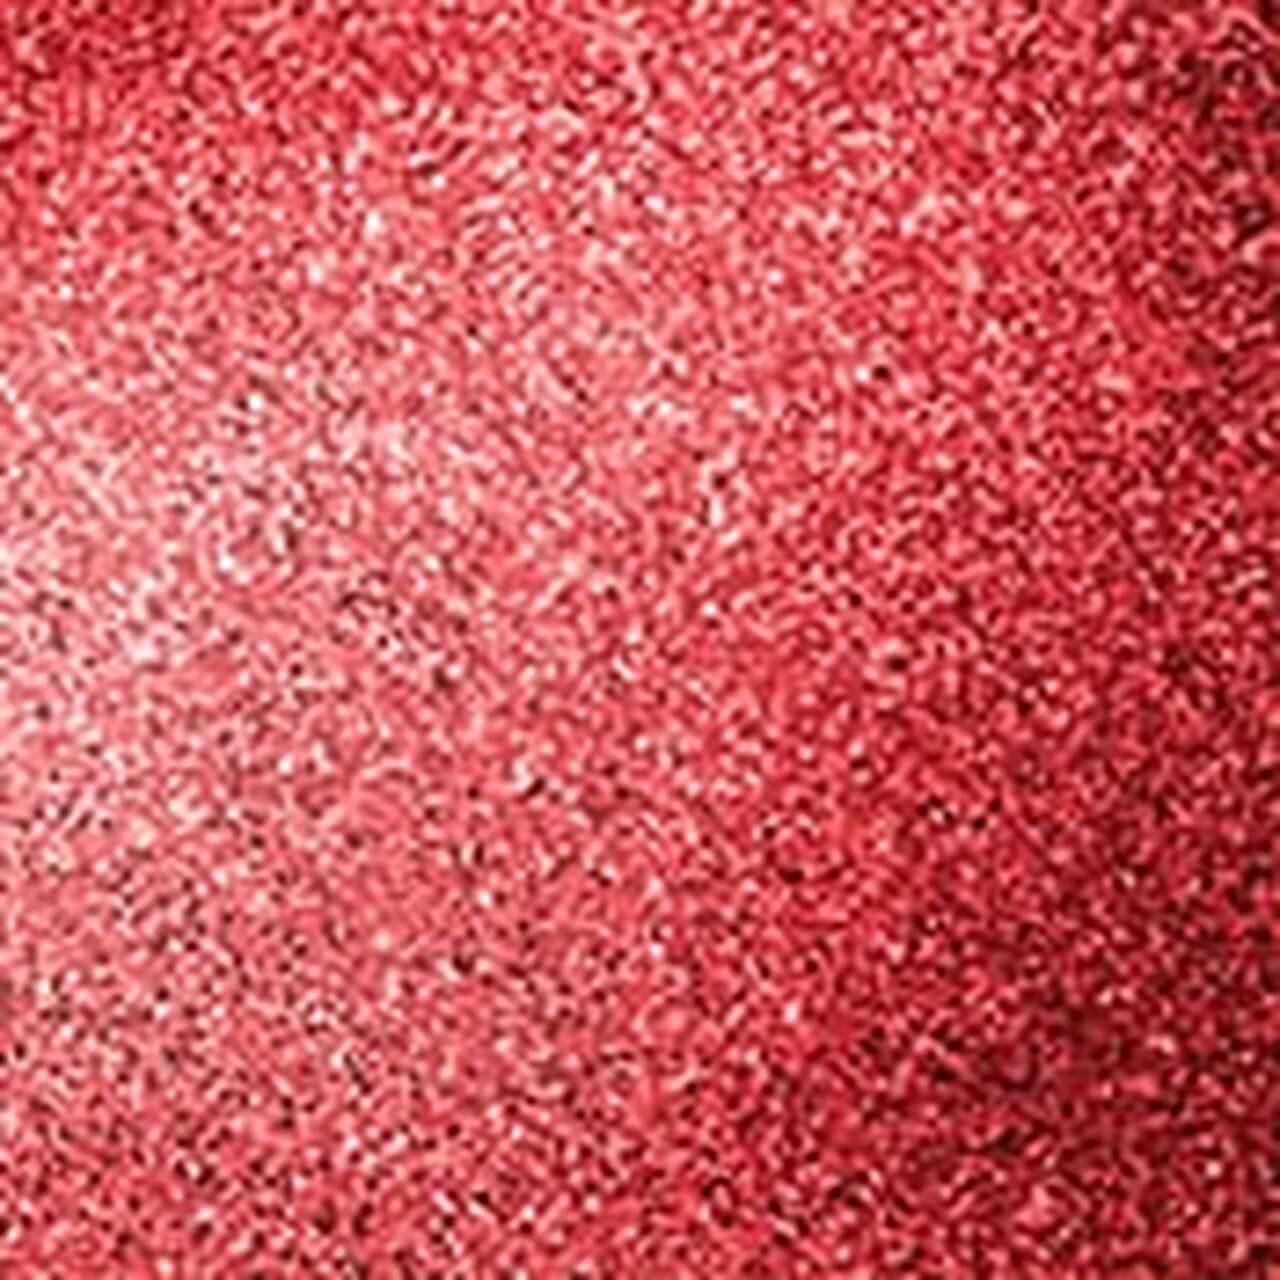 EcoPoxy Polyester Color Glitters 15G | Glitter Pigments | Hamilton Lee Supply